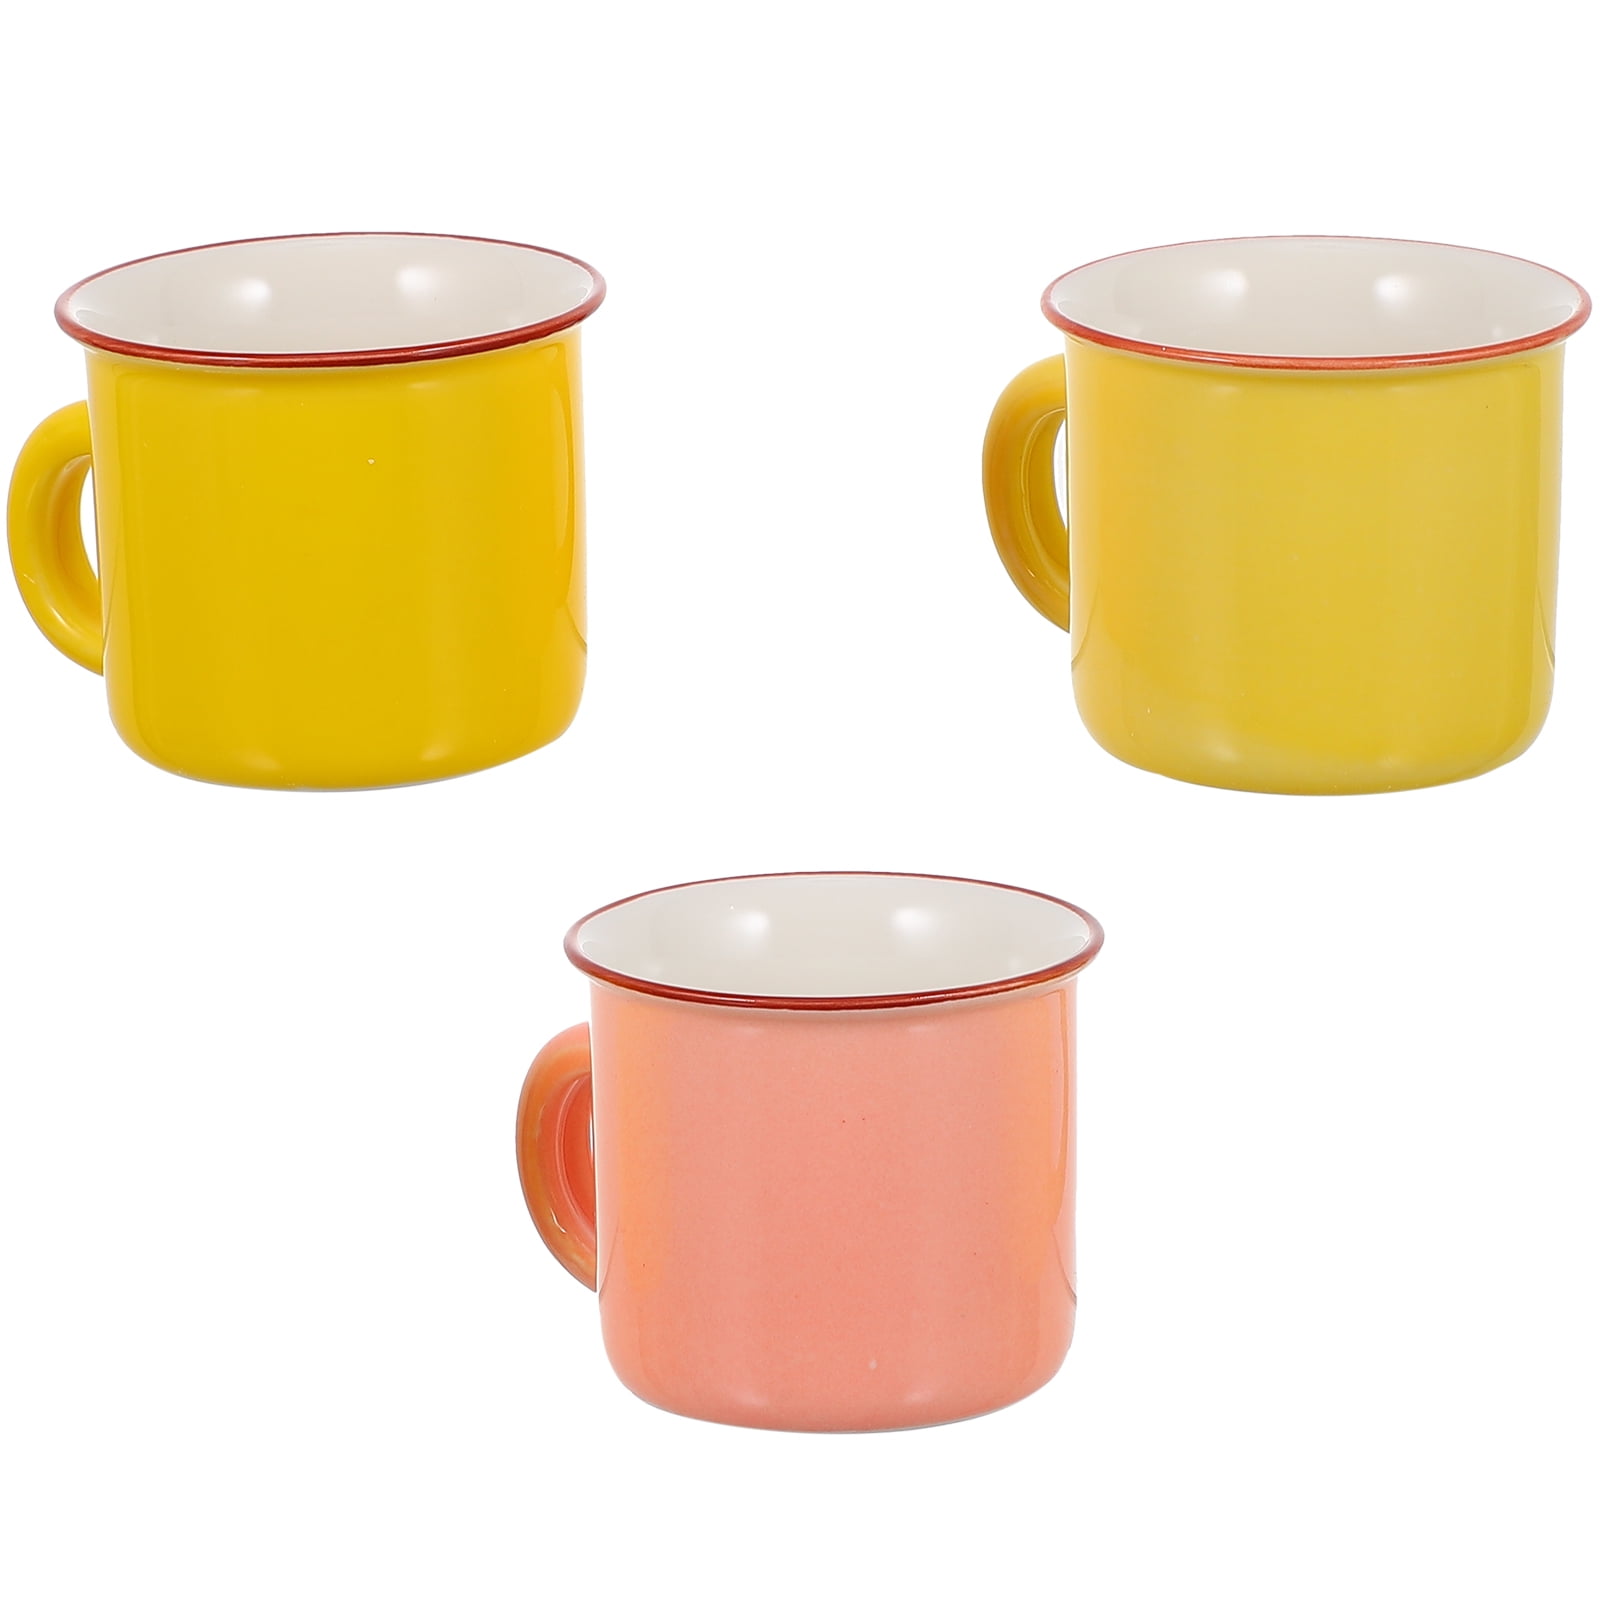 Hemoton 3pcs Ceramic Japanese Sake Cups Small Tea Cups Drinking Cups Wine Cups Mugs 